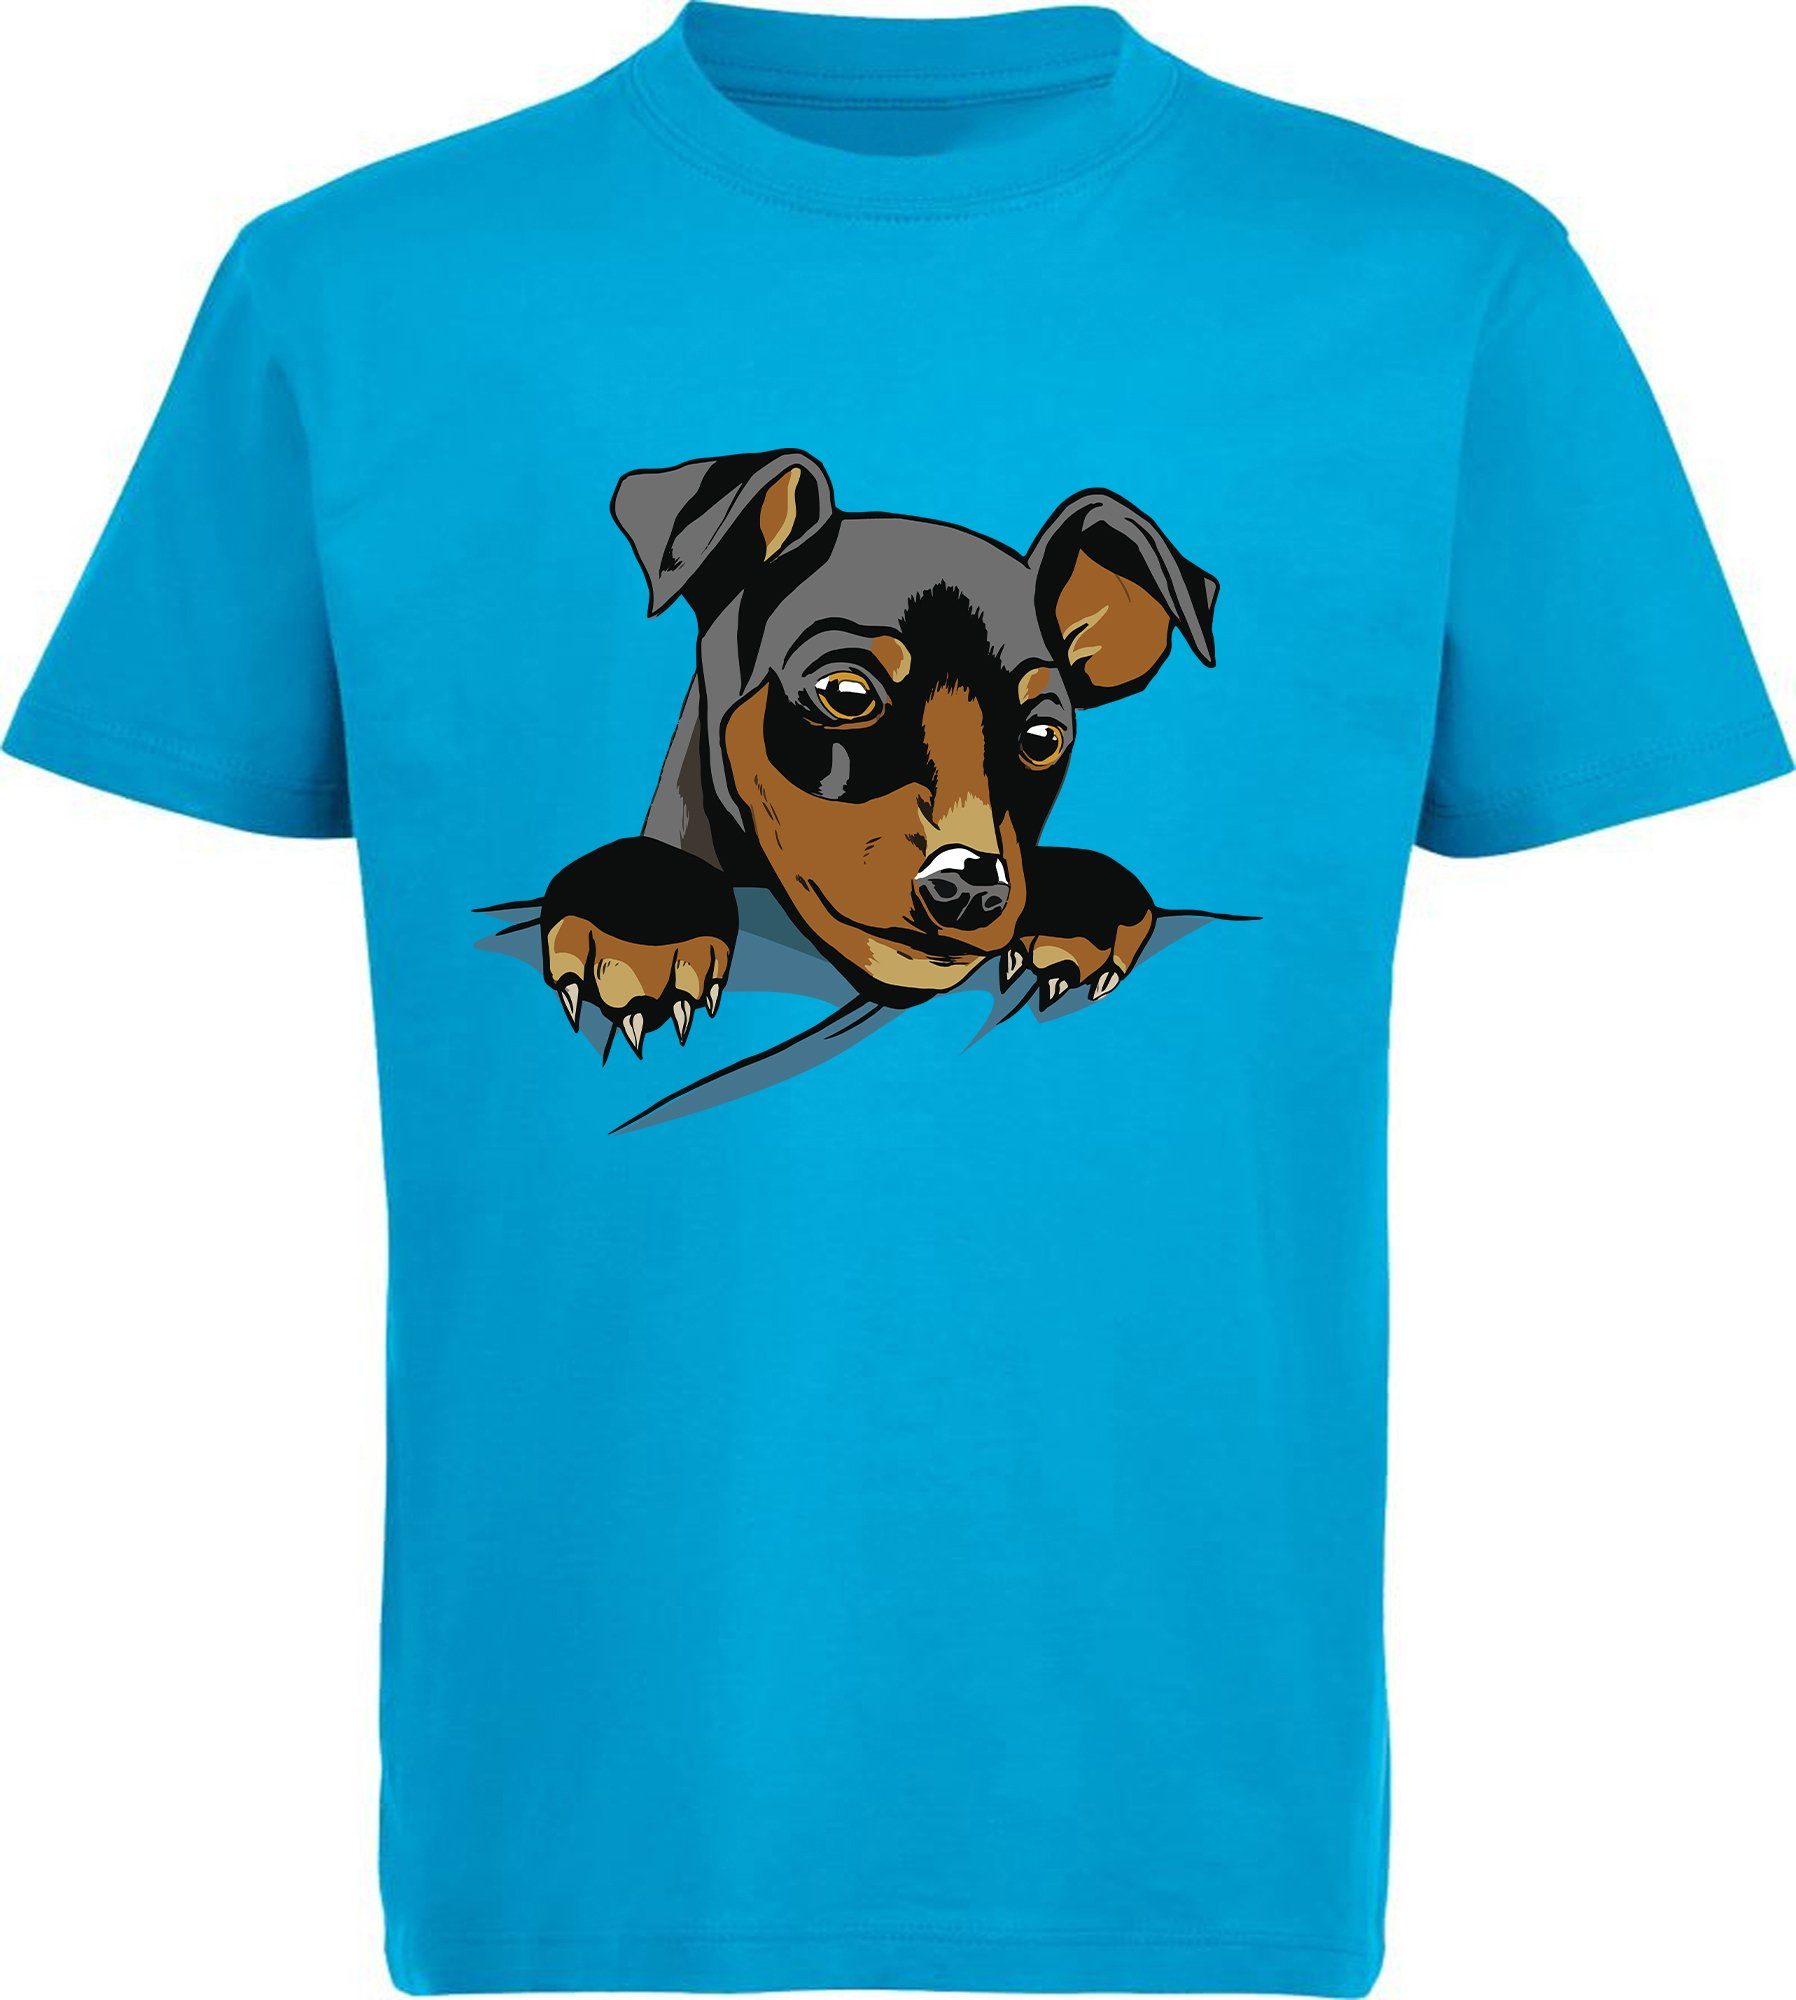 aqua - i227 Kinder Welpe blau mit Süßer Hunde MyDesign24 T-Shirt Baumwollshirt Aufdruck, bedrucktes Print-Shirt